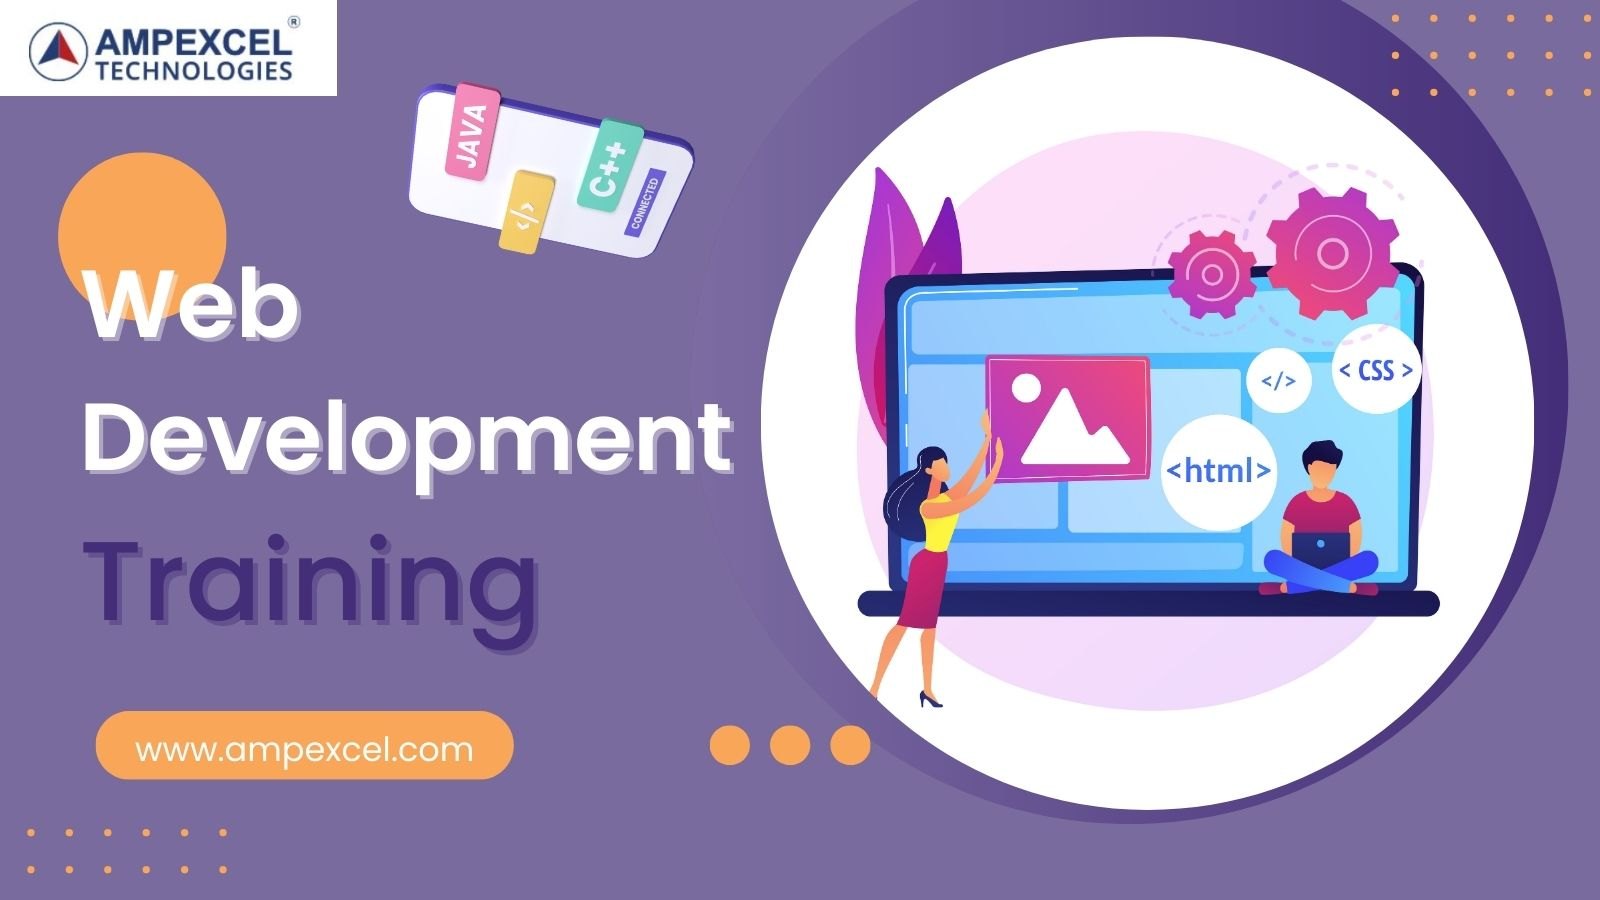 Career development, Software/ Mobile App Dev Training